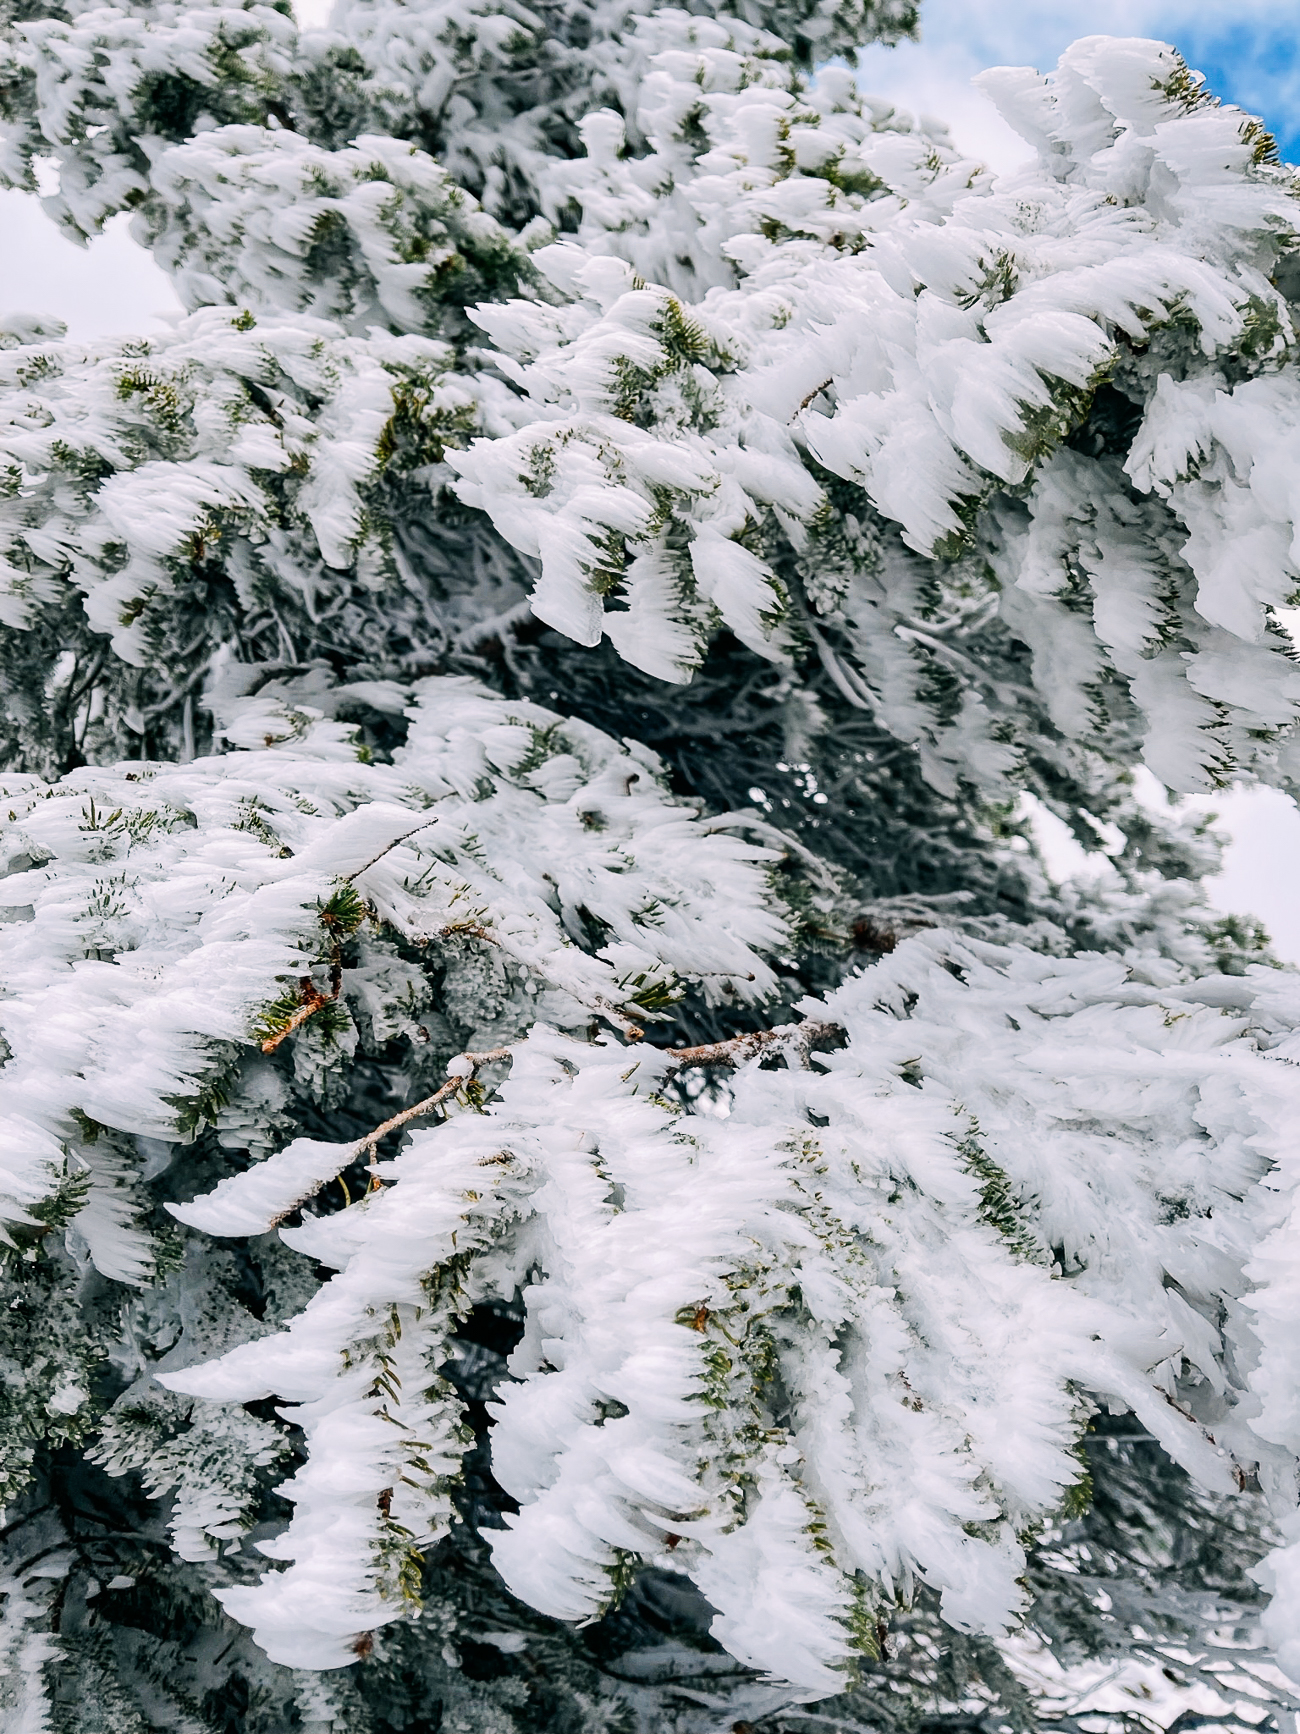 Windswept snow on evergreen trees